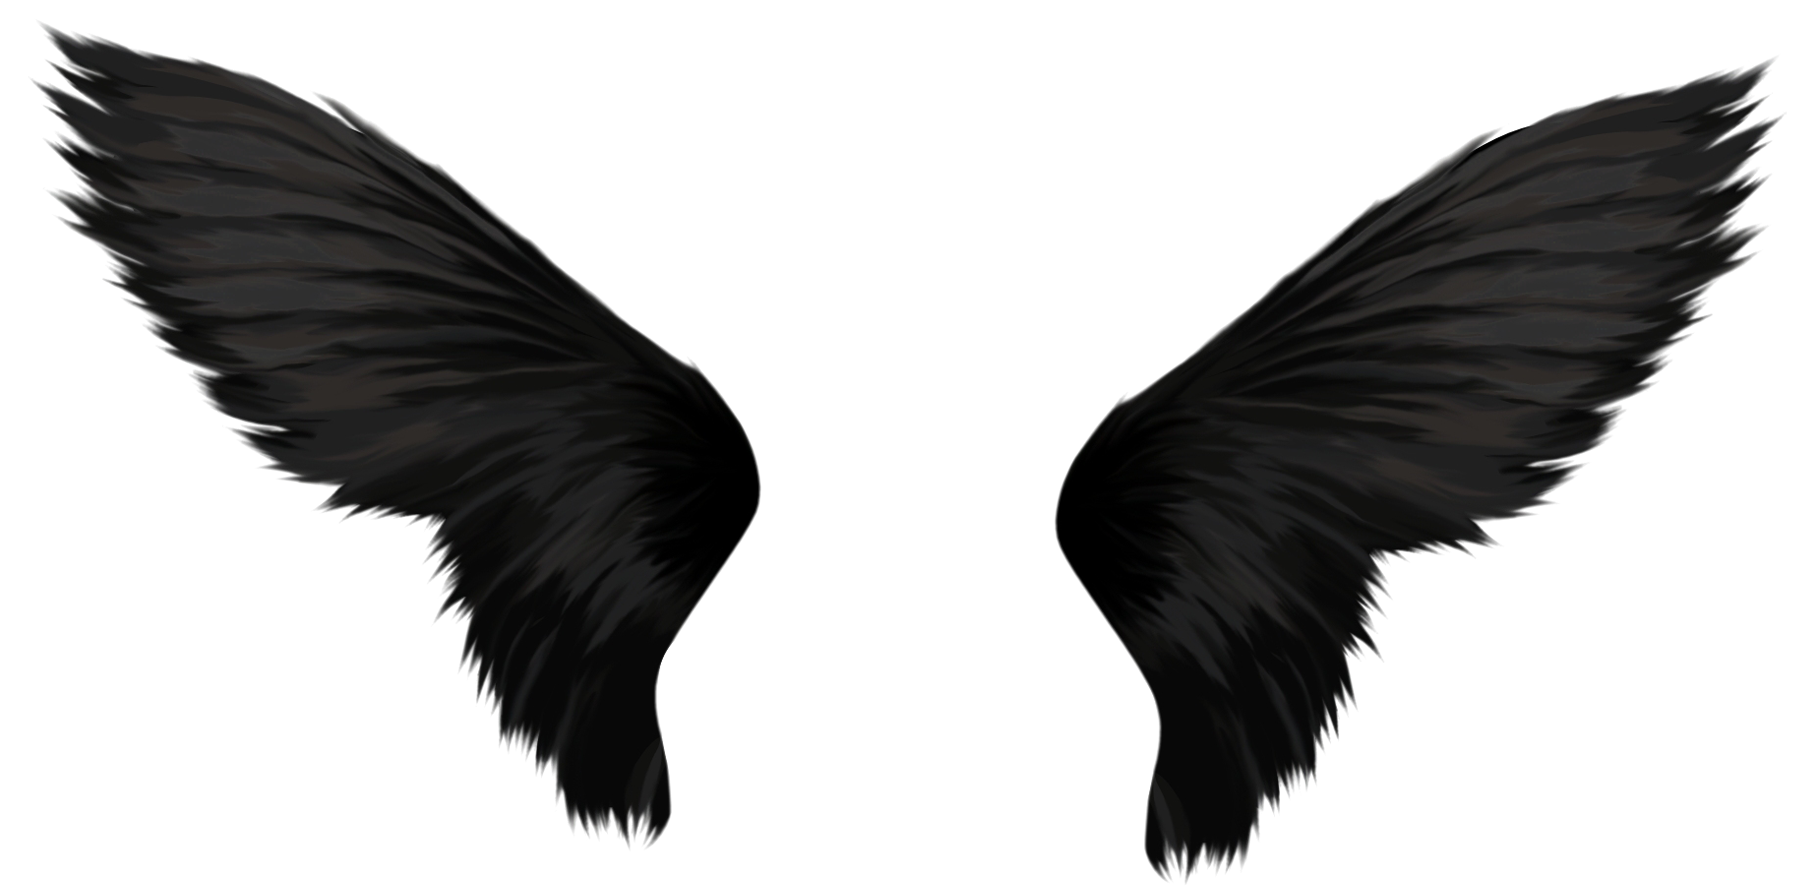 Demon Wings Side View Gratuit PNG Image